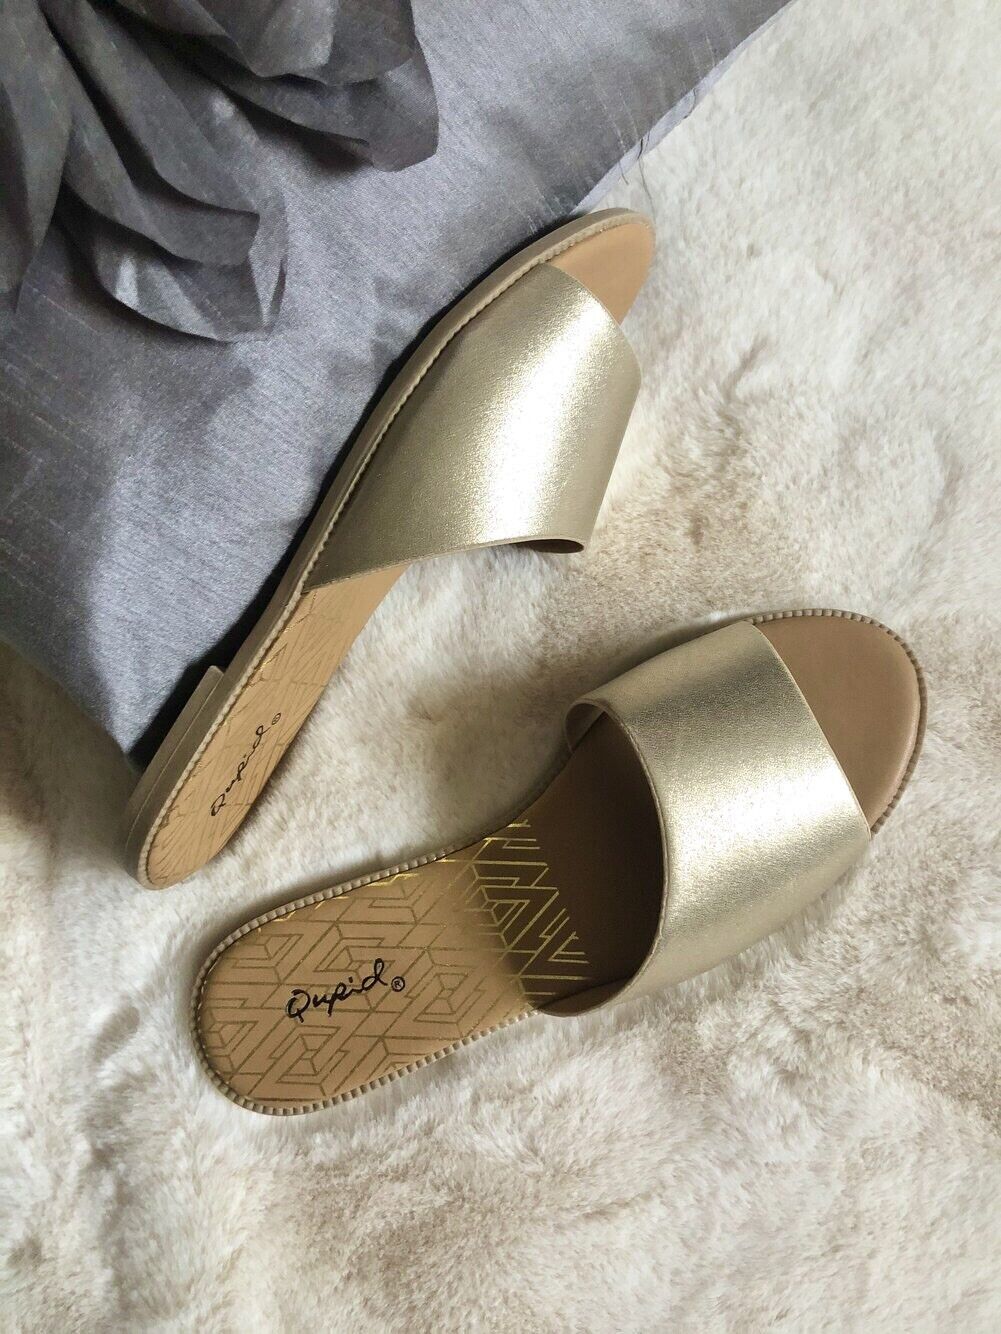 NWB Qupid Gold Single Strap Slide On Sandals Size 8